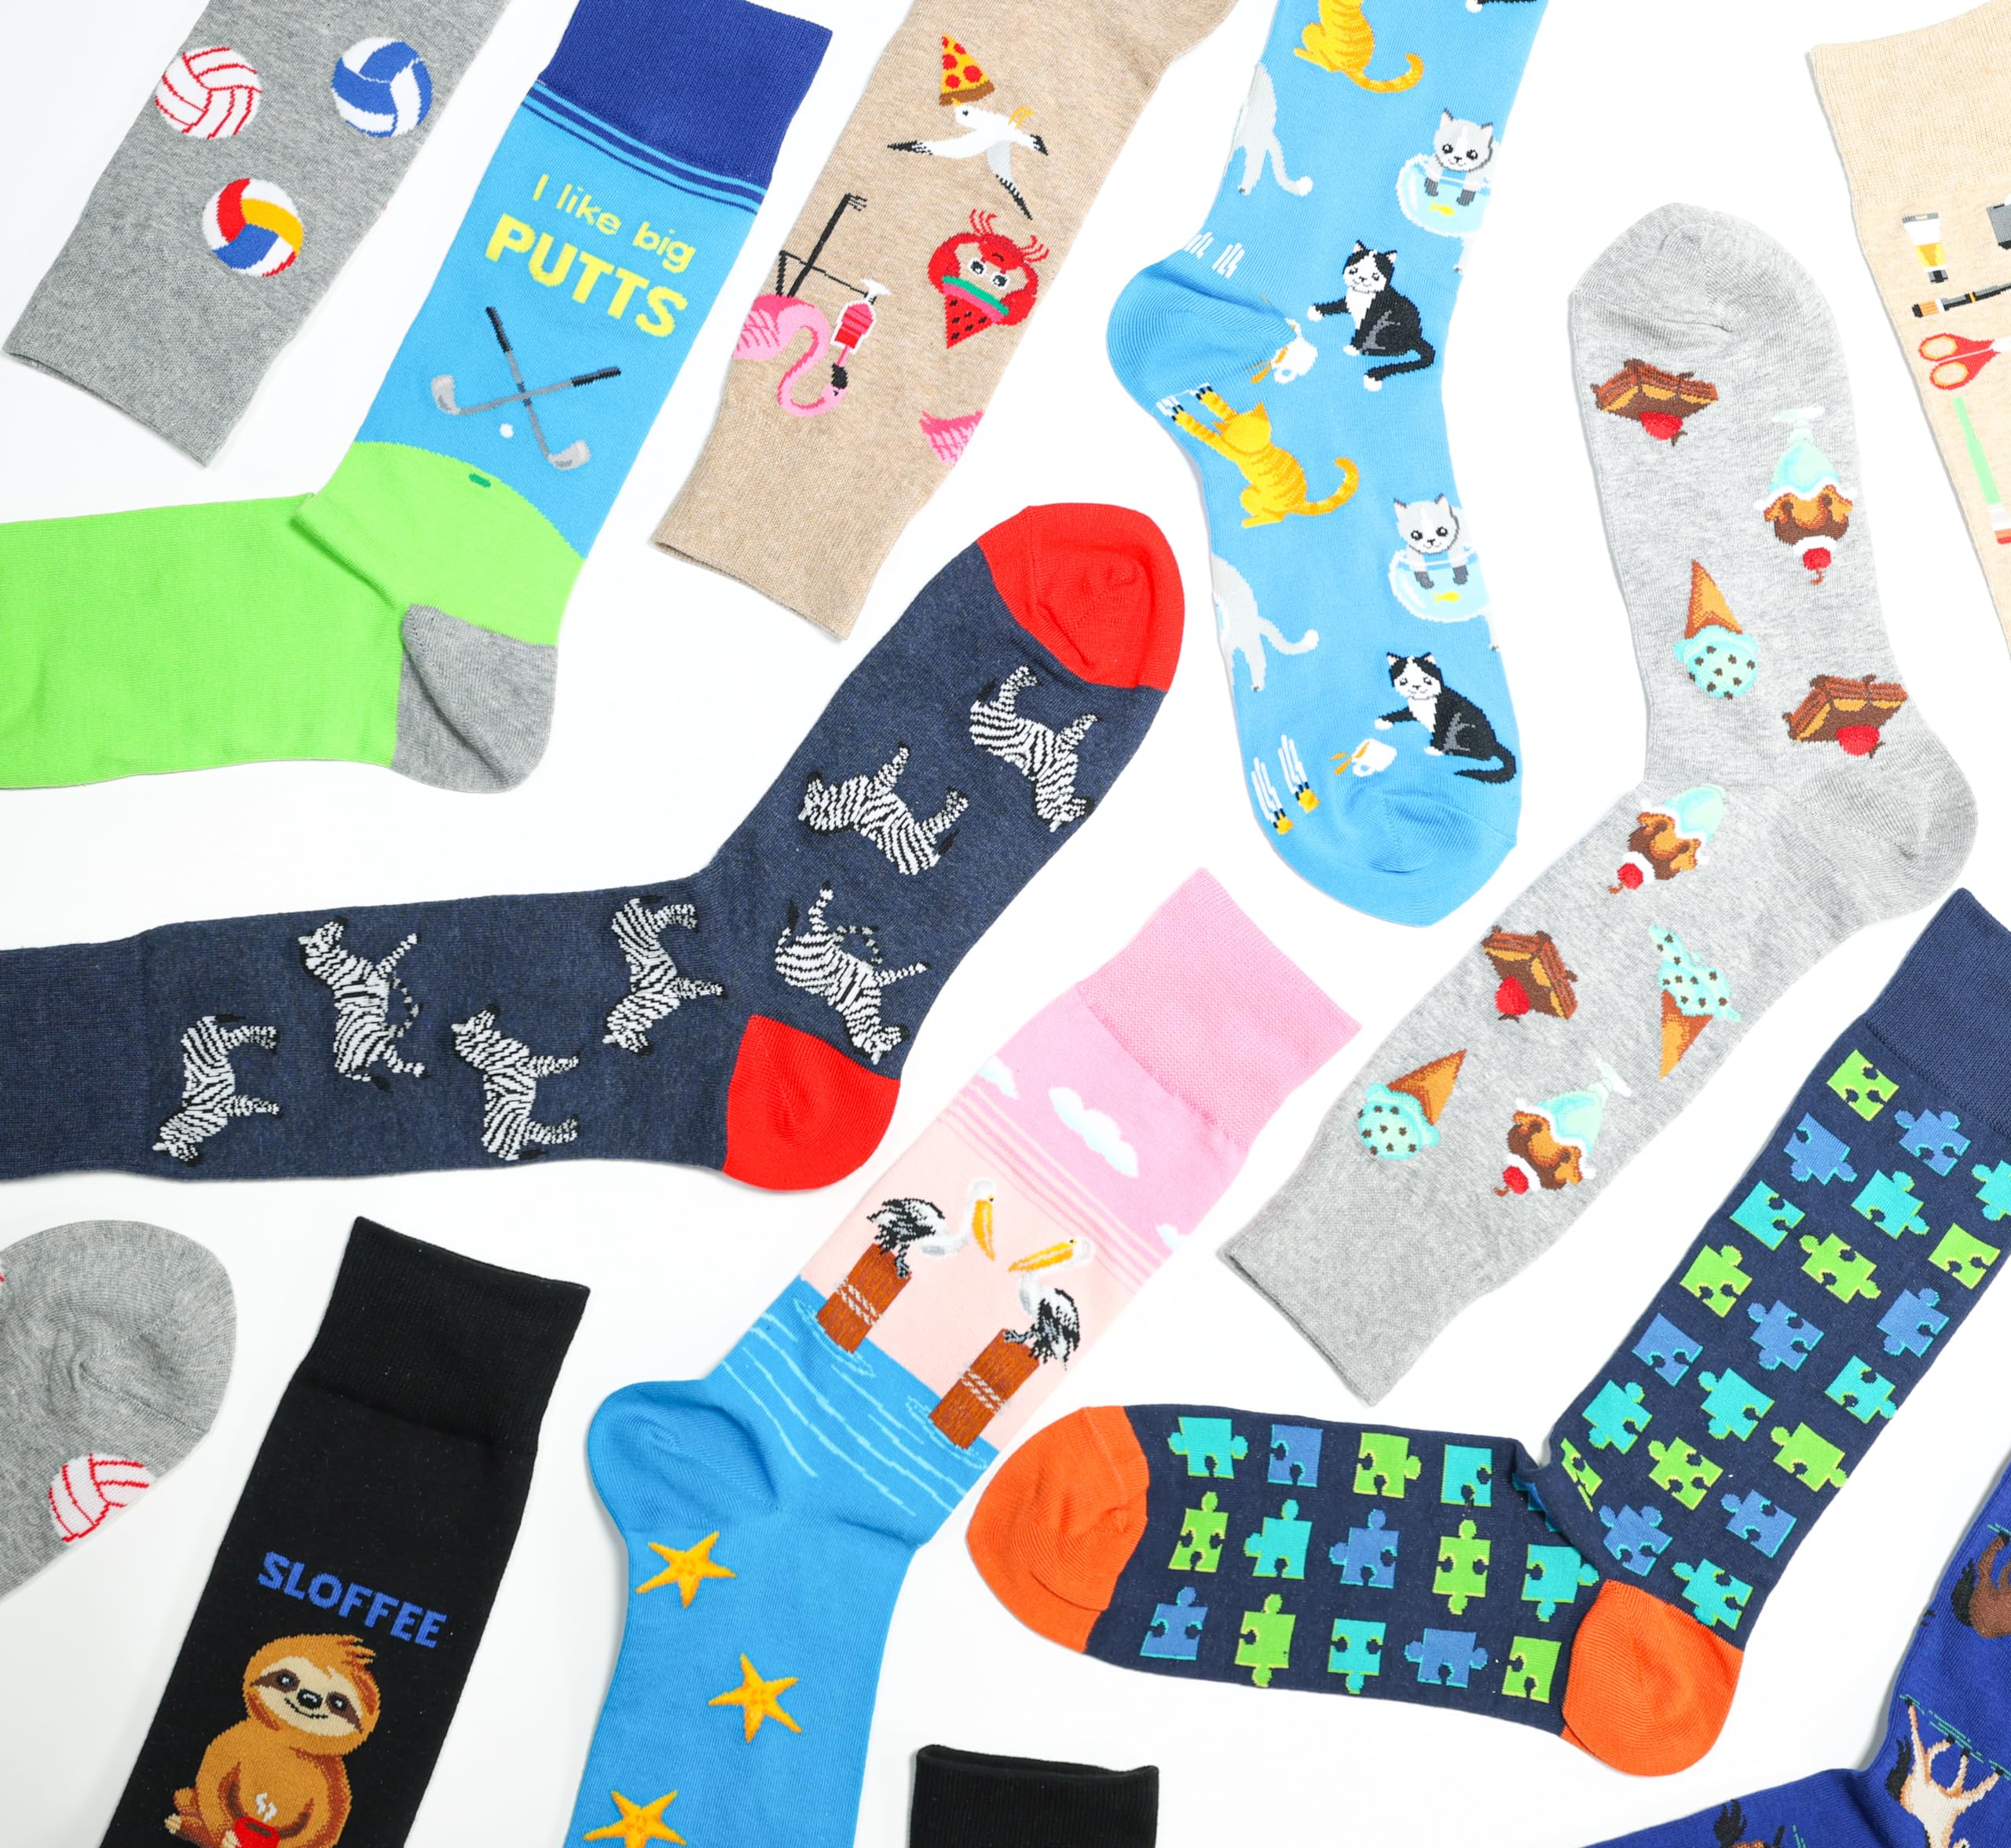 Hot Sox Men's Fun Conversation Starter Crew Socks-1 Pair Pack-Cool Funny Pop Culture Gifts